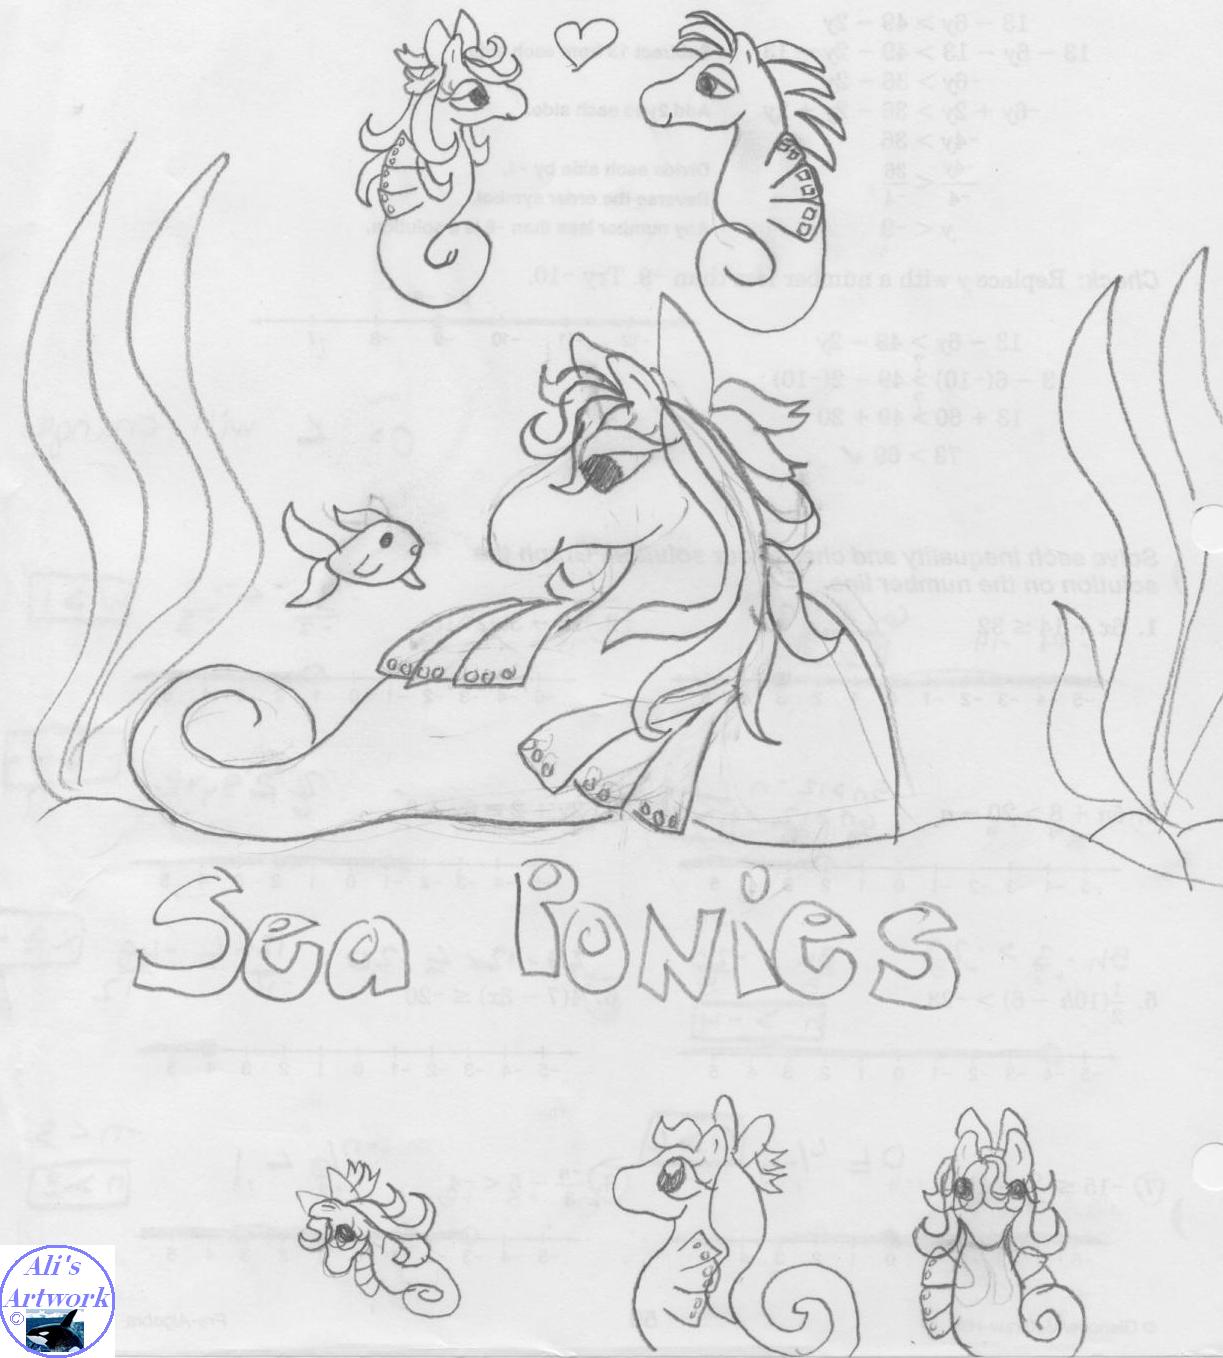 Sea Mist/Whitecap Sea Ponies by Spider_Psycho247